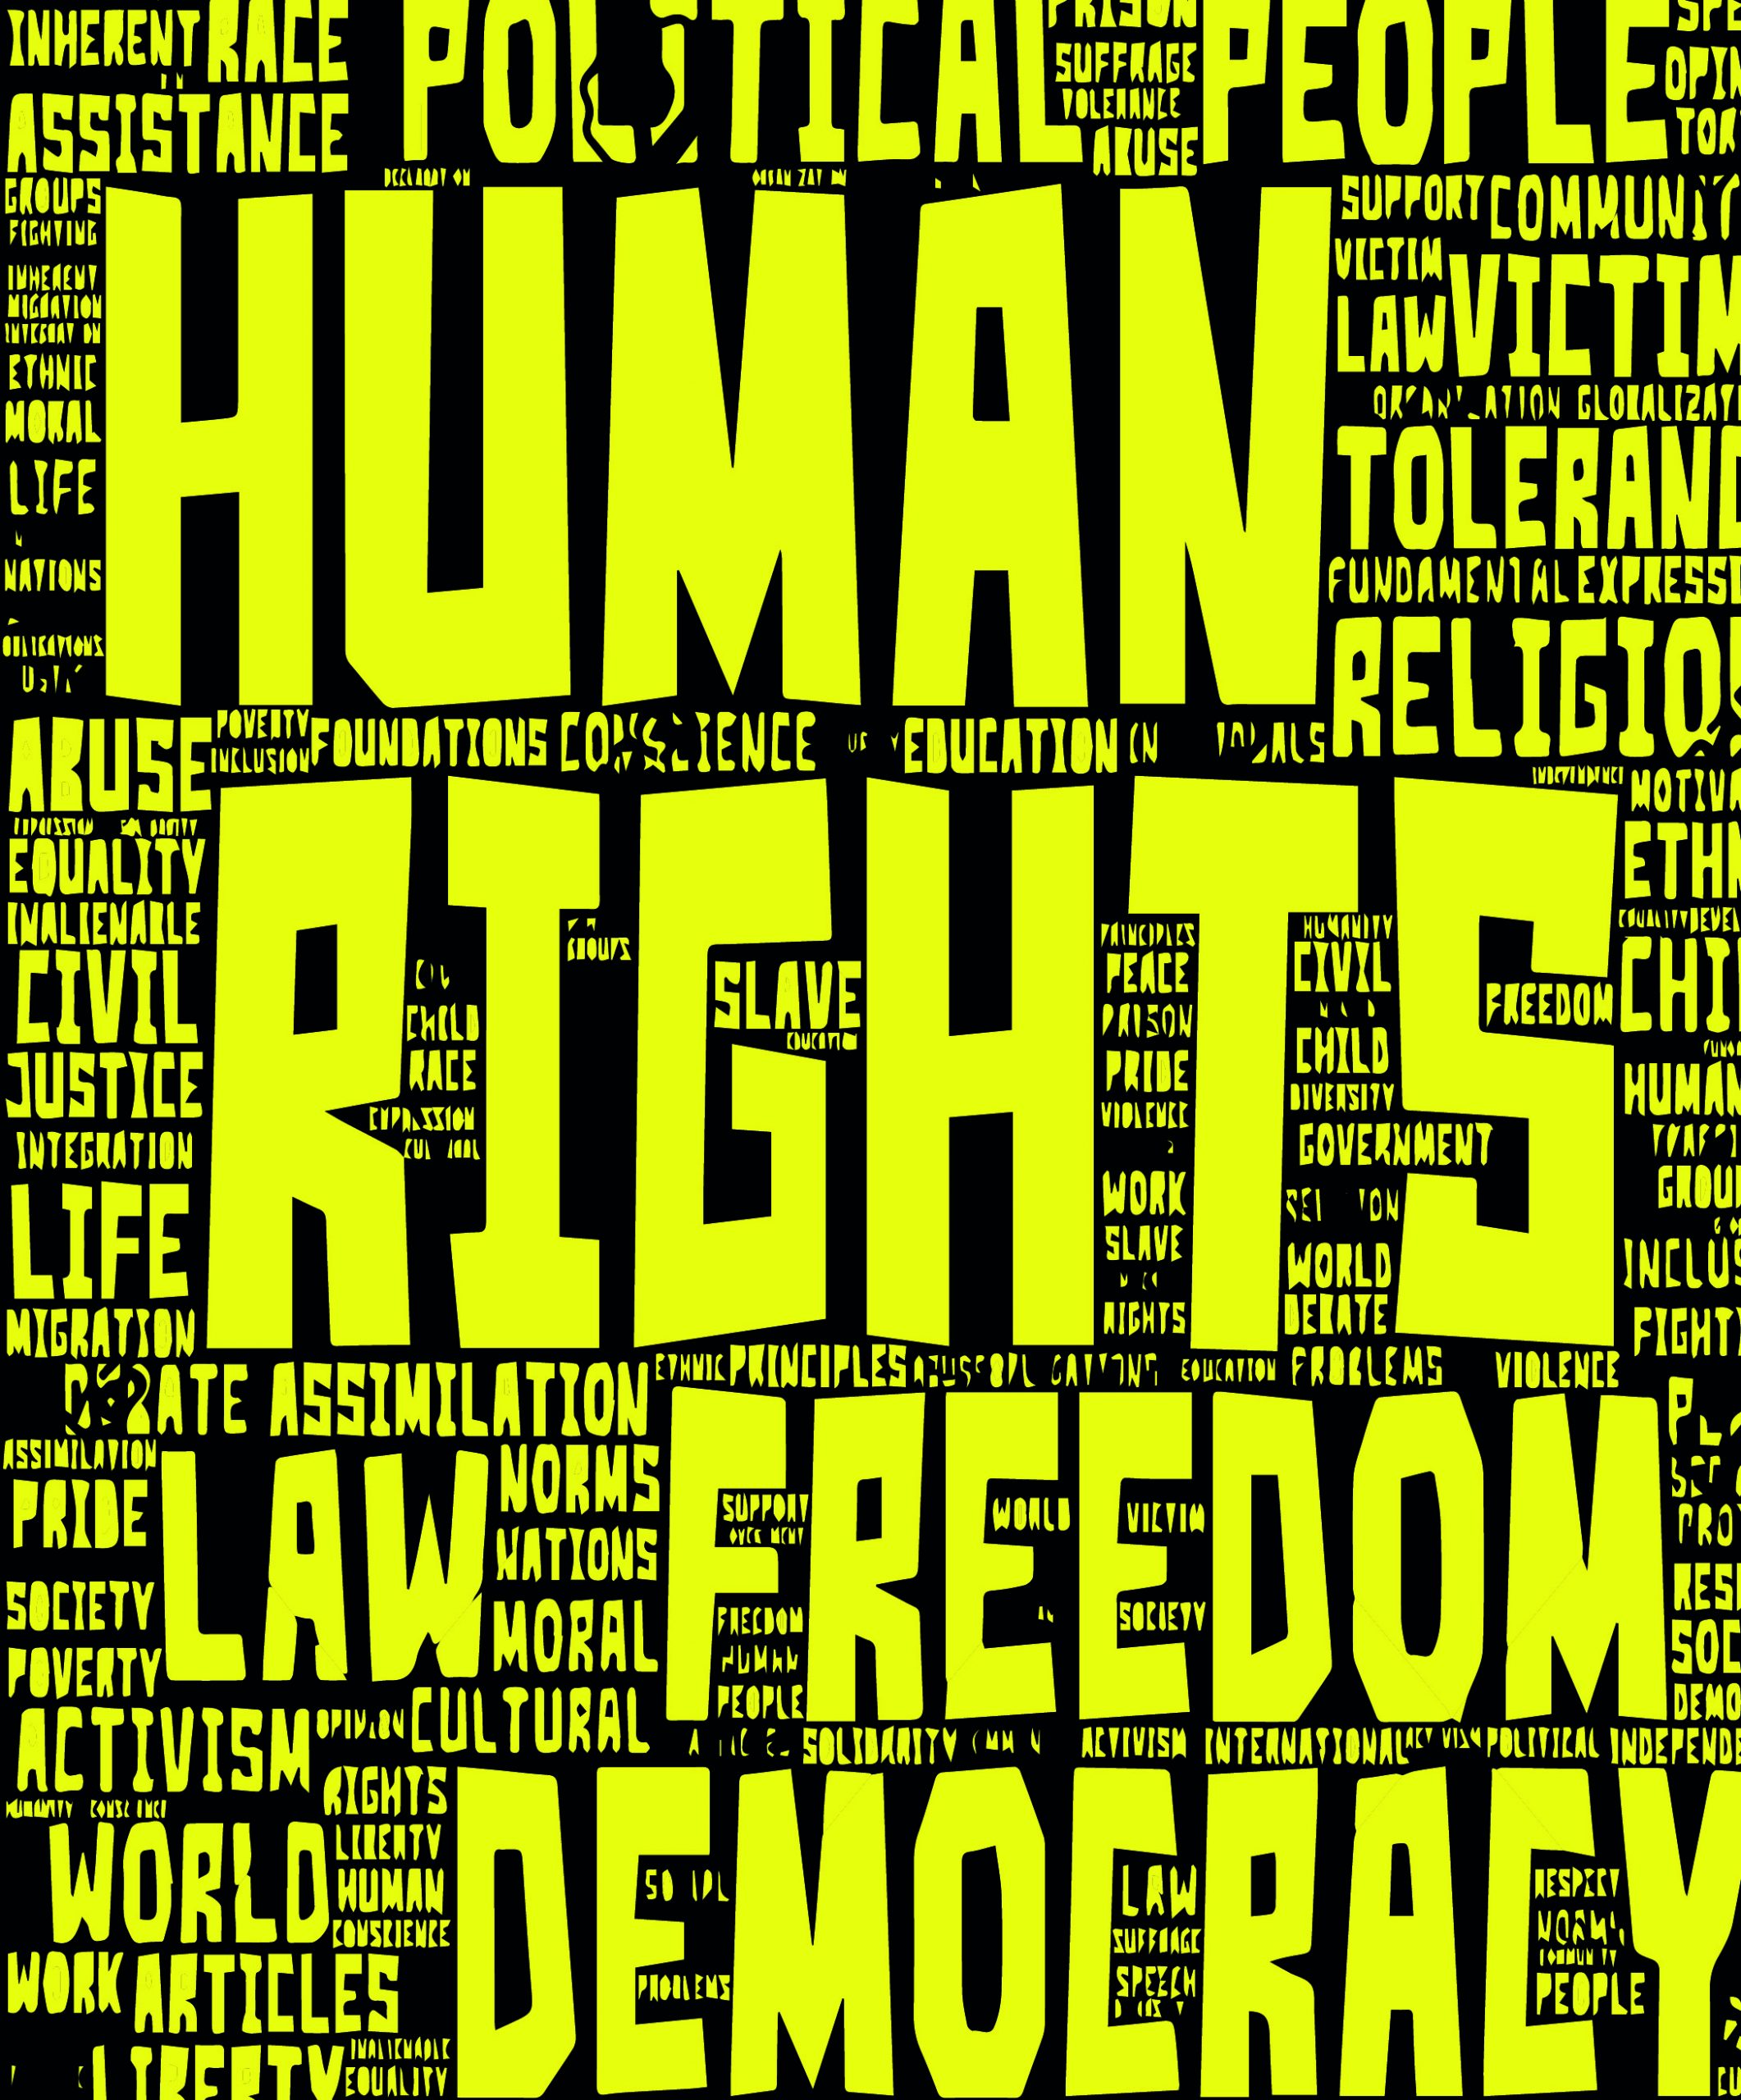 All’opera per i diritti umani